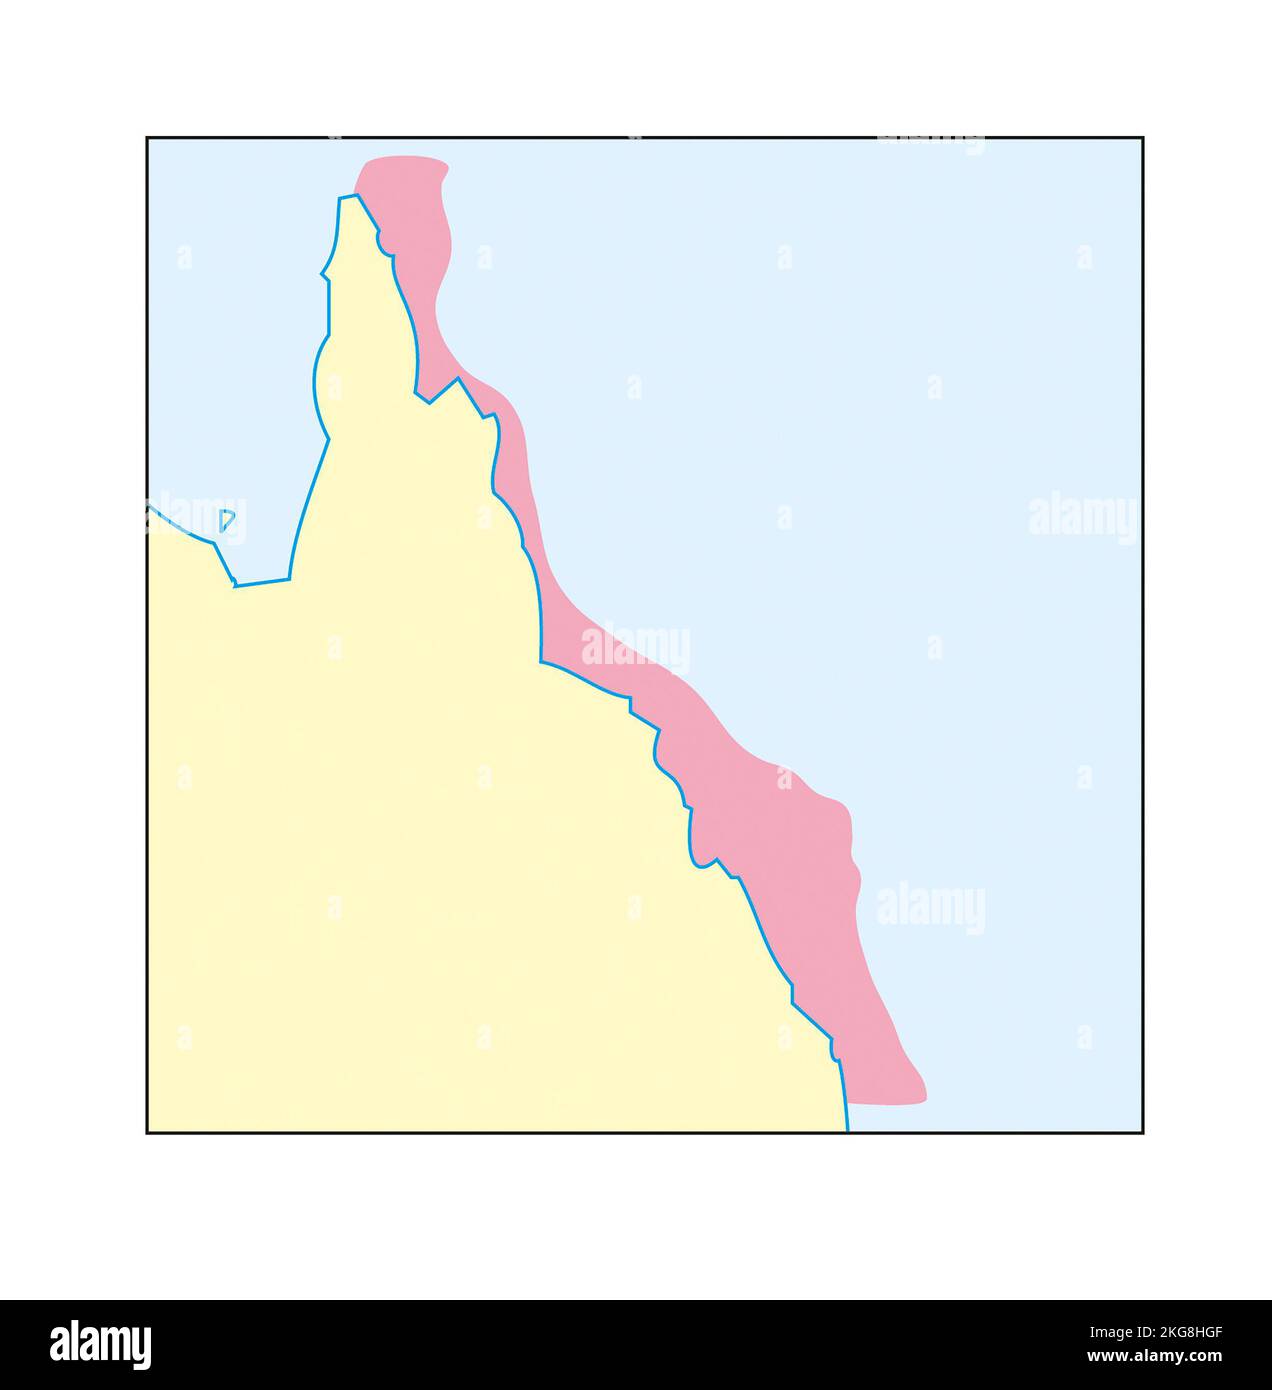 Illustration, map of Great Barrier Reef, Australia Stock Photo